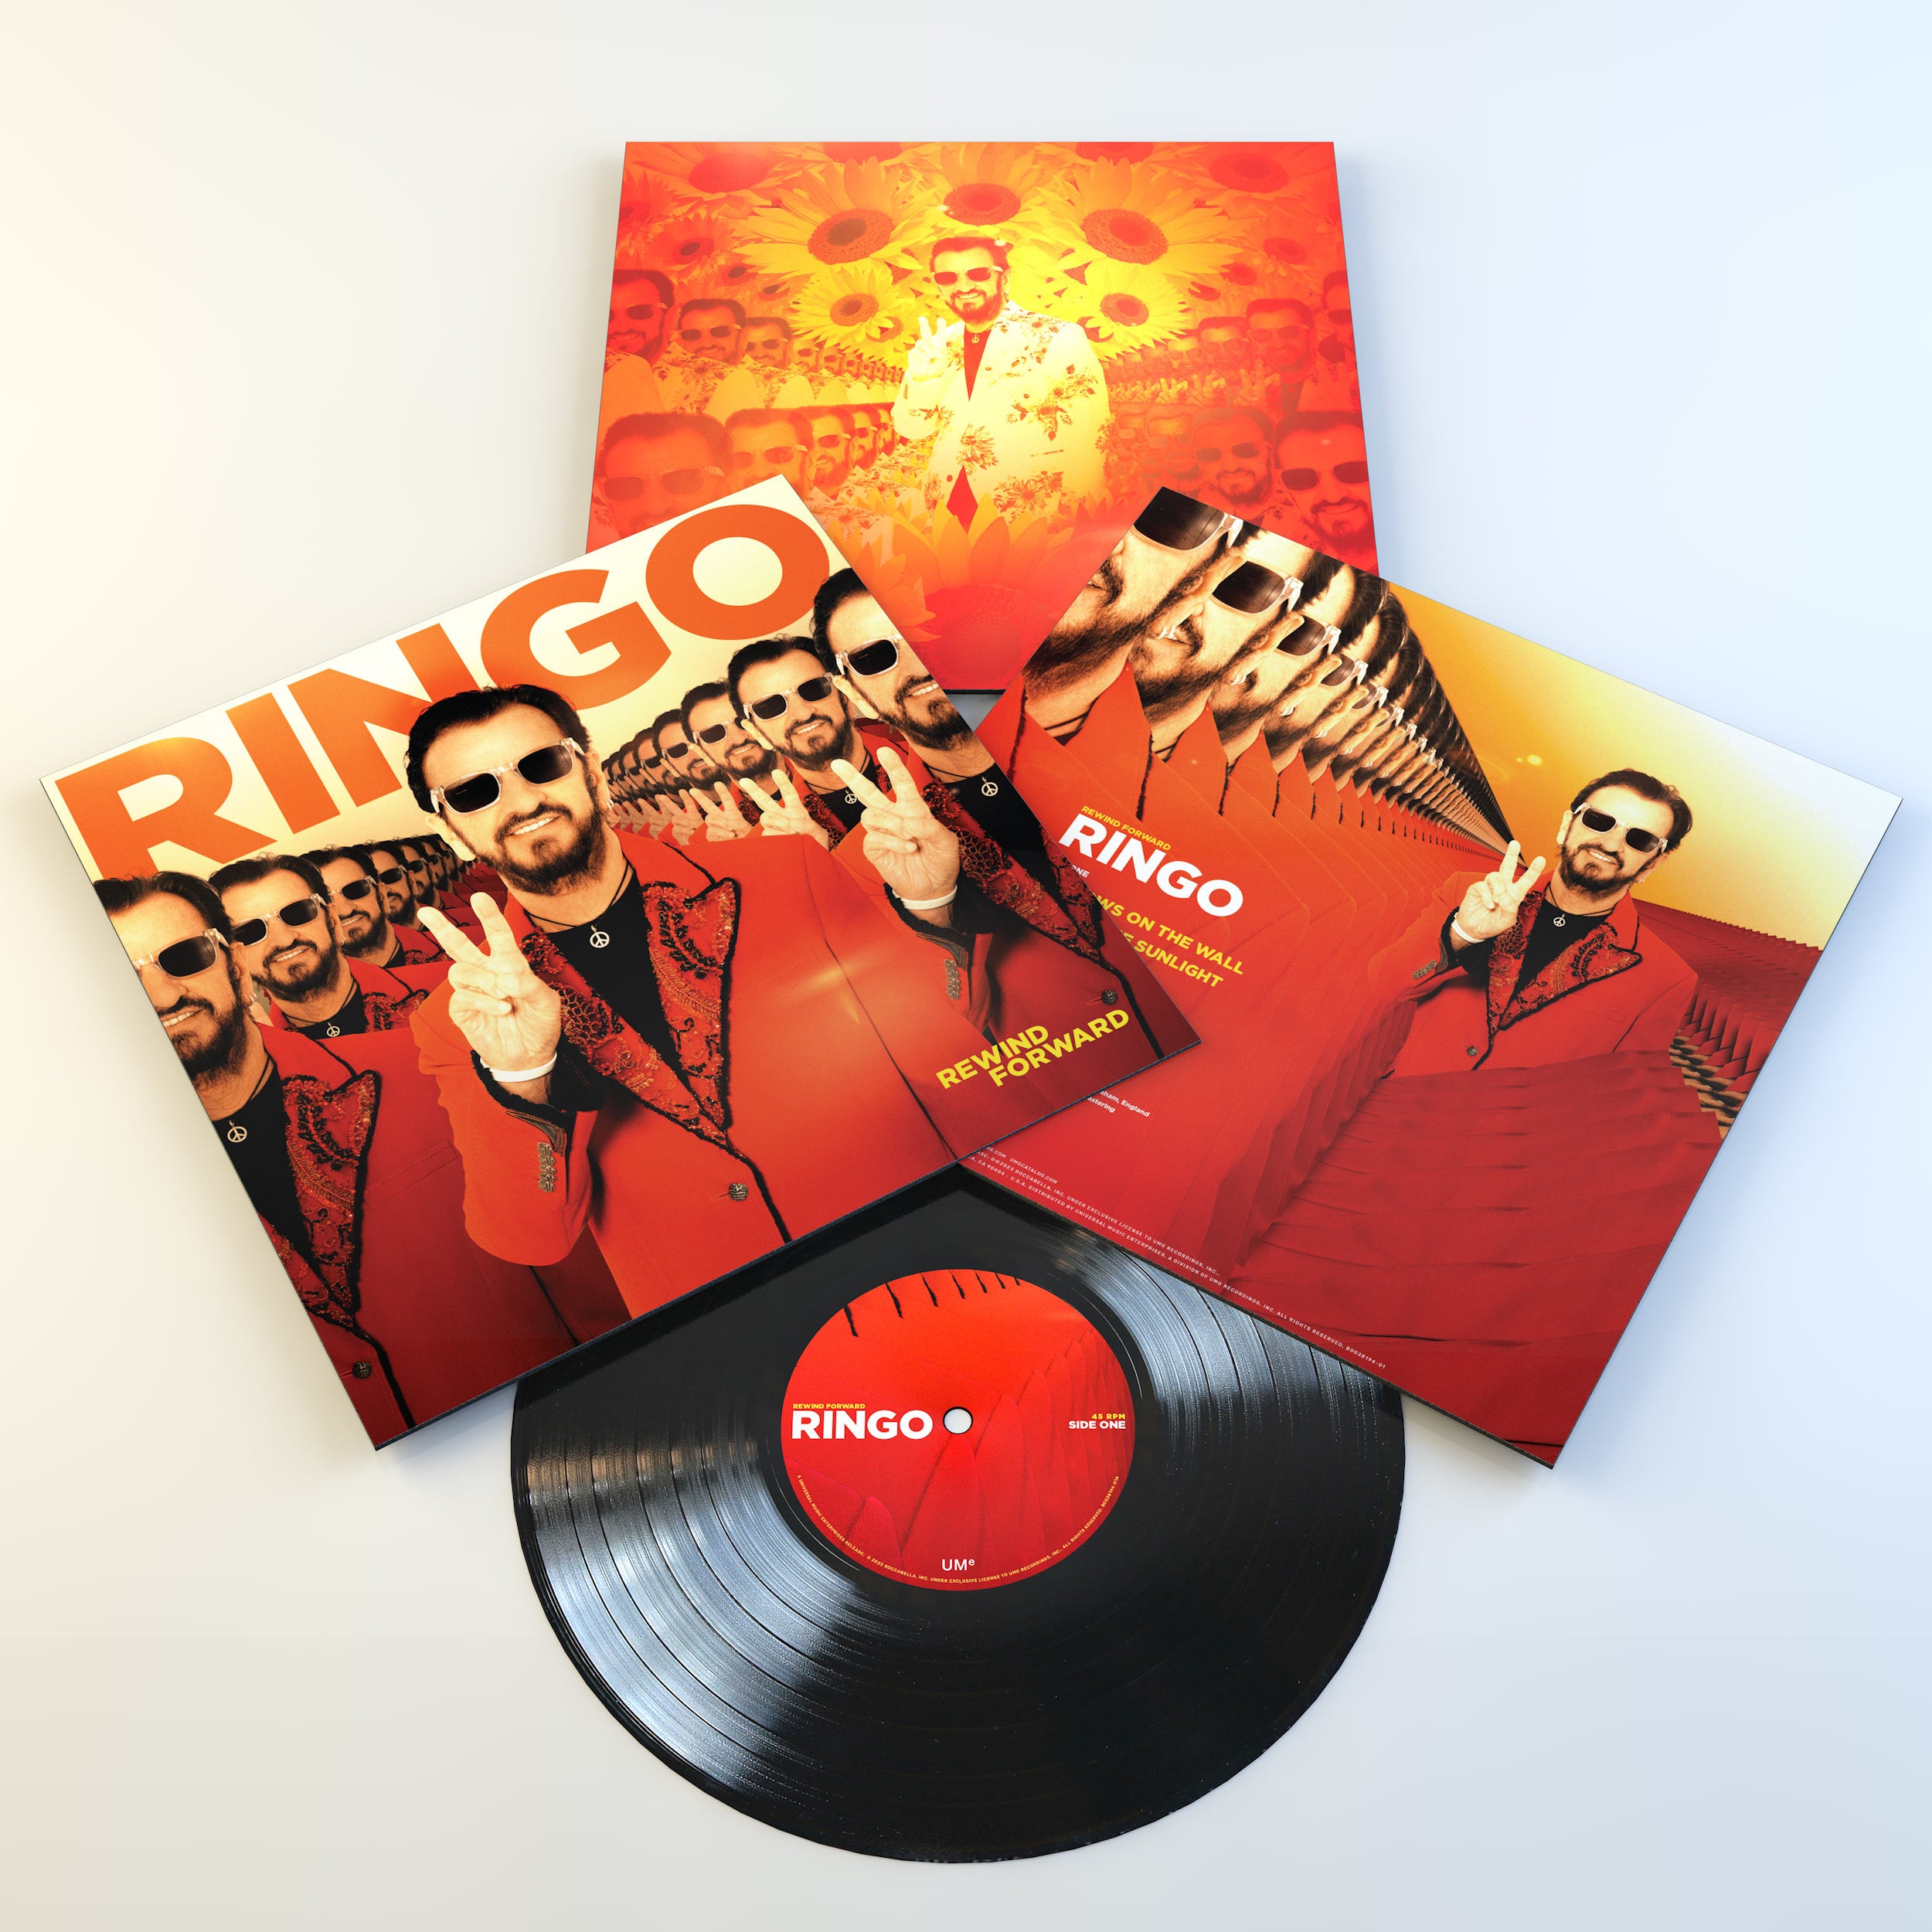 Ringo Starr - Rewind Forward: Vinyl EP